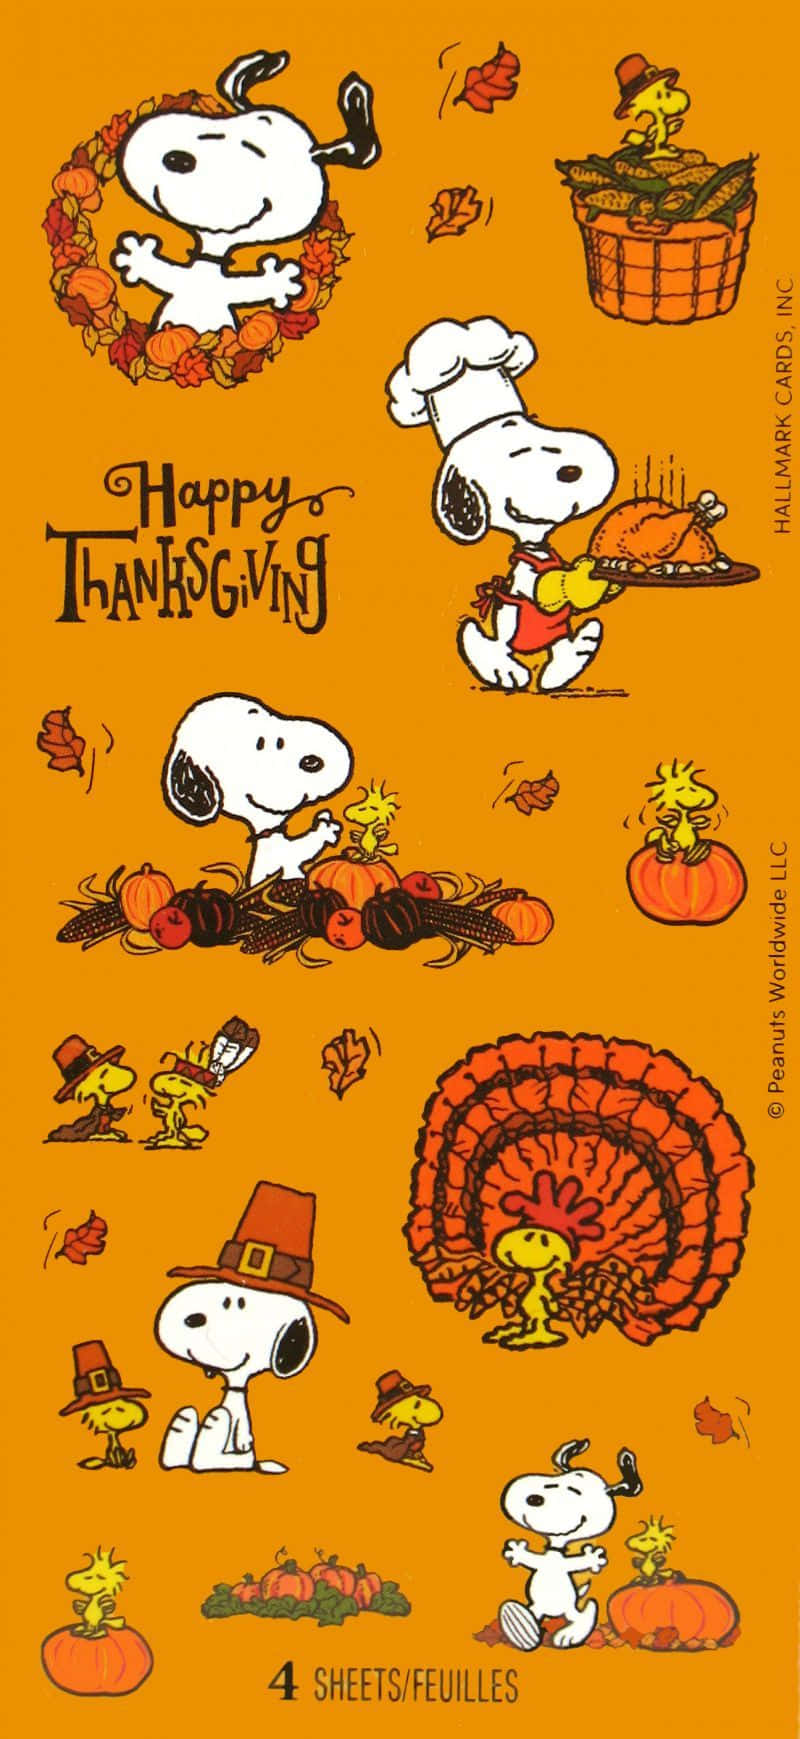 Snoopyfejrer Thanksgiving Med Sin Familie Og Venner. Wallpaper